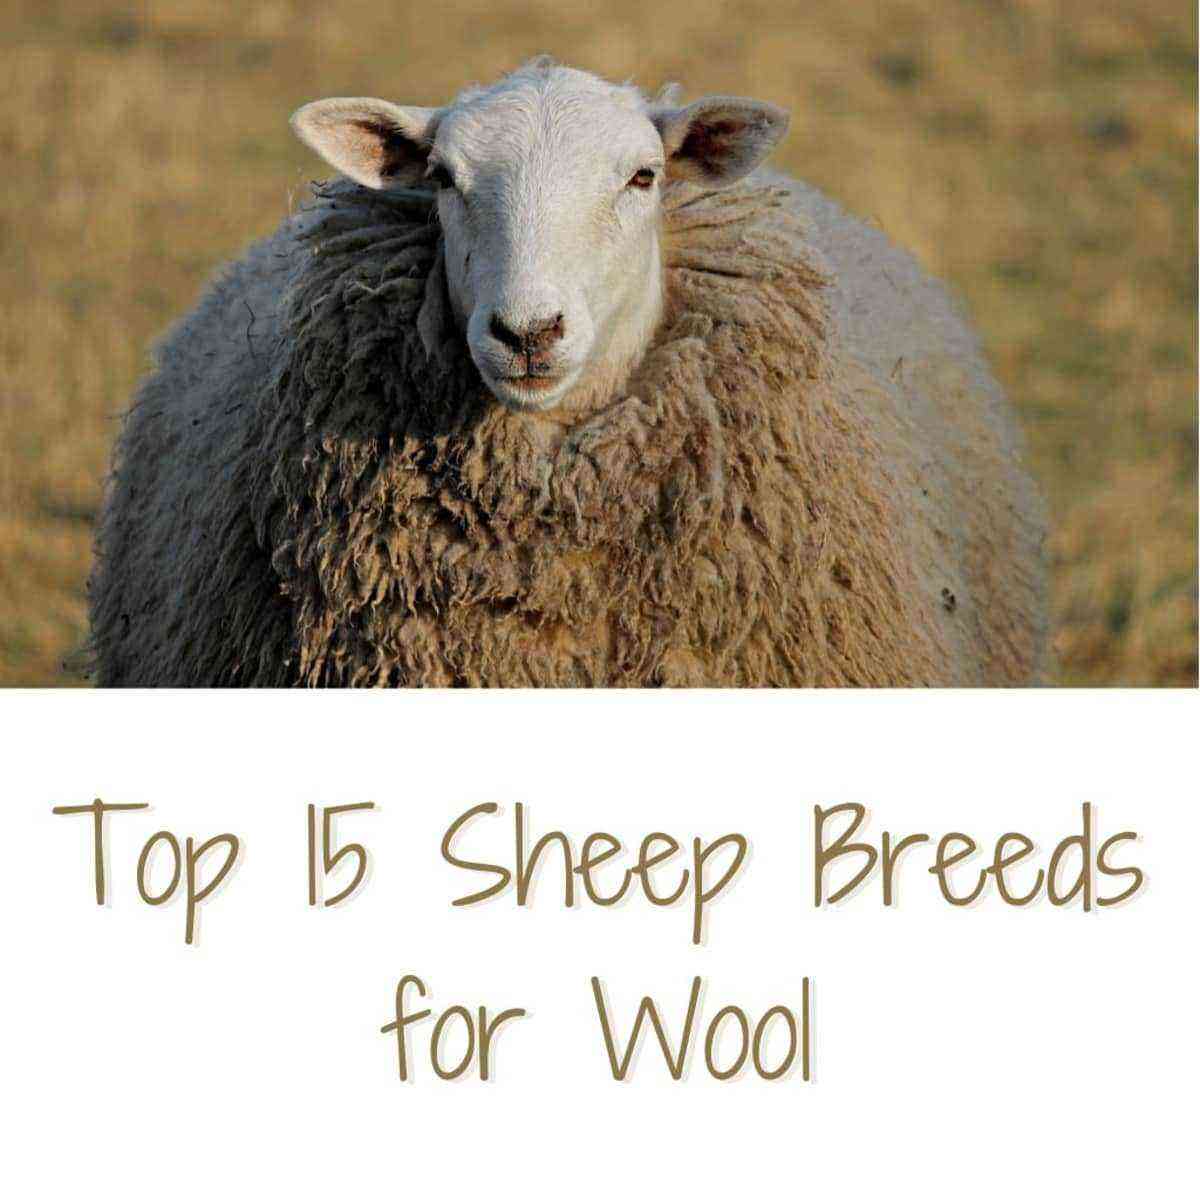 Fine-wool sheep breeding: the most famous breeds, breeding